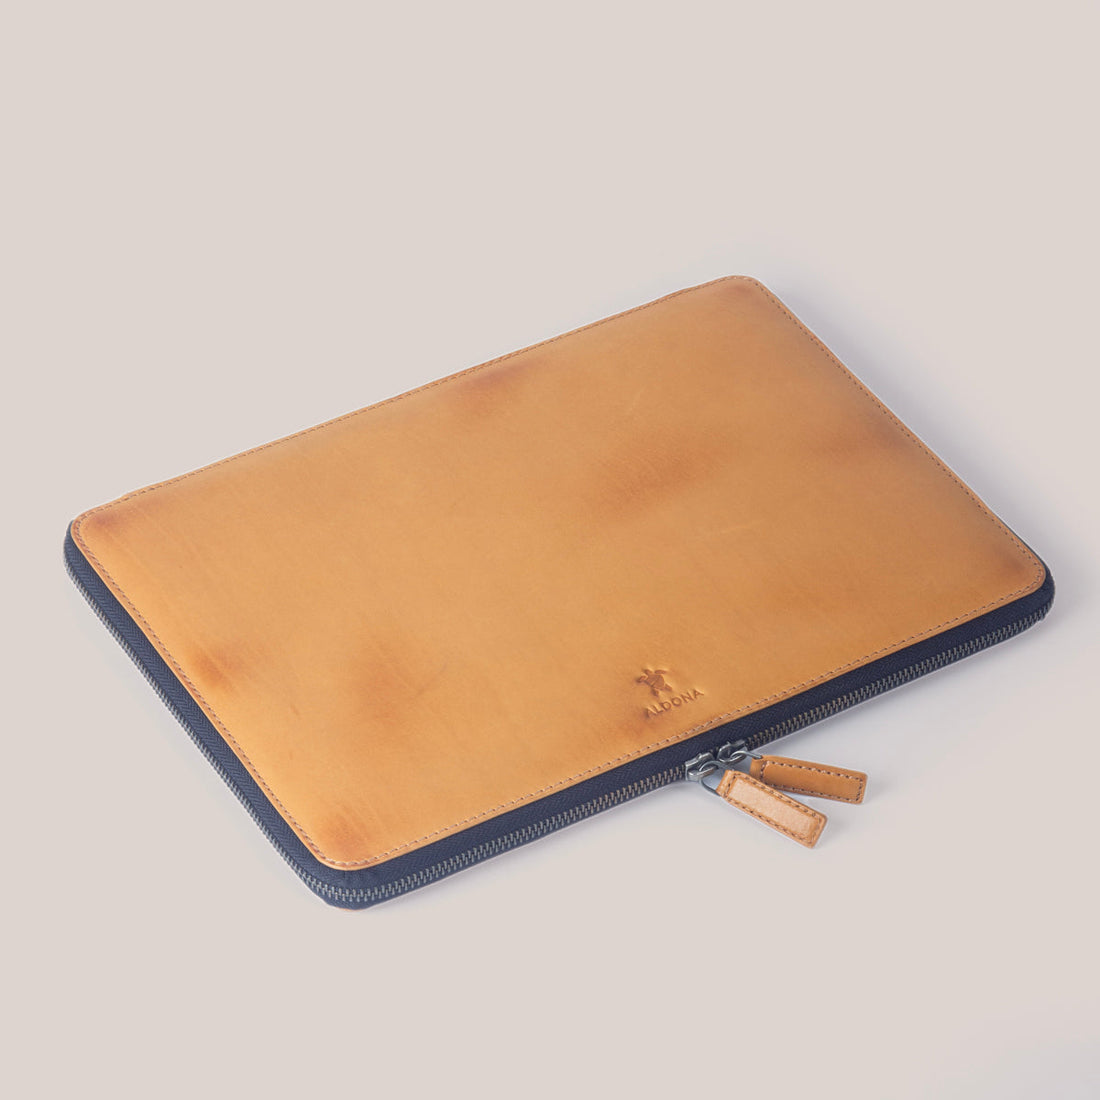 Microsoft Surface Book 15 Zippered Laptop Case - Onyx Black